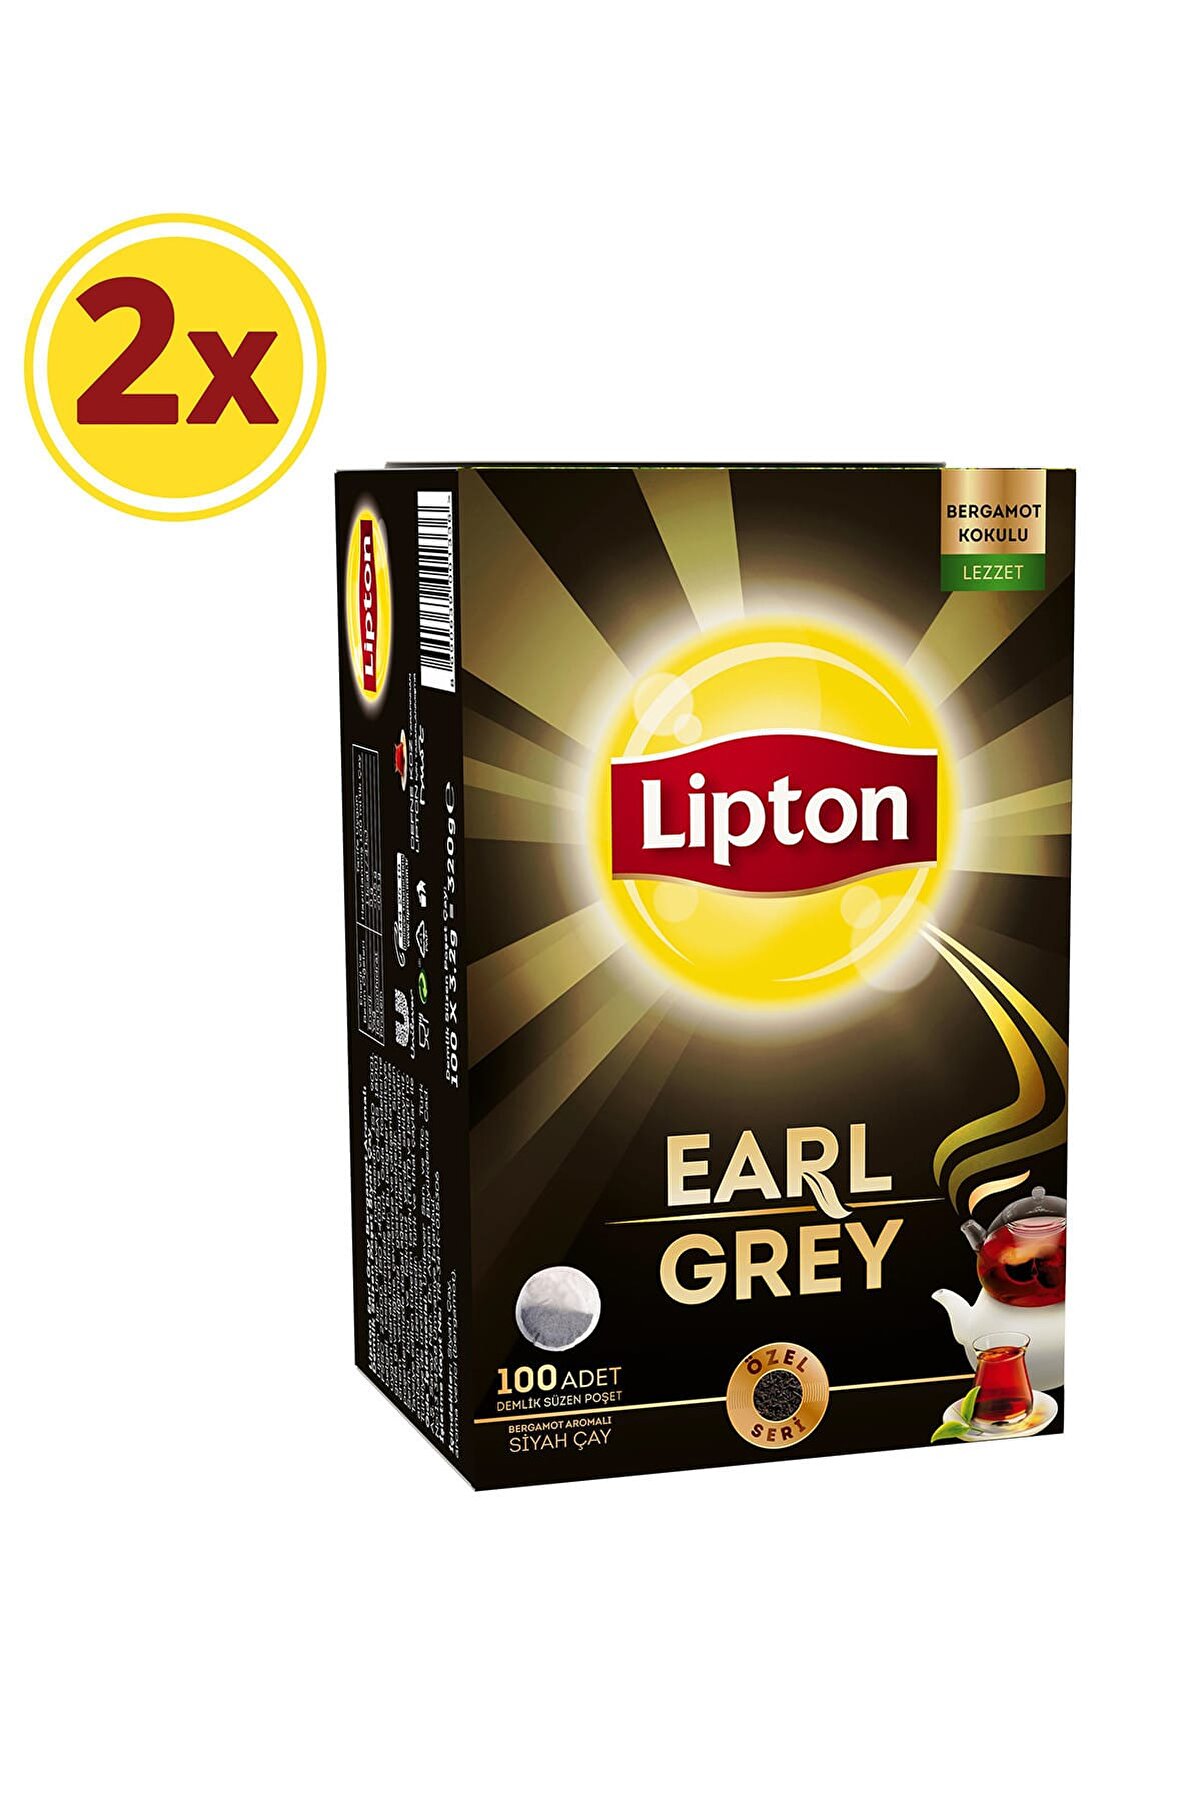 Lipton Earl Grey Demlik Poşet Cay 100'lü x 2 Adet